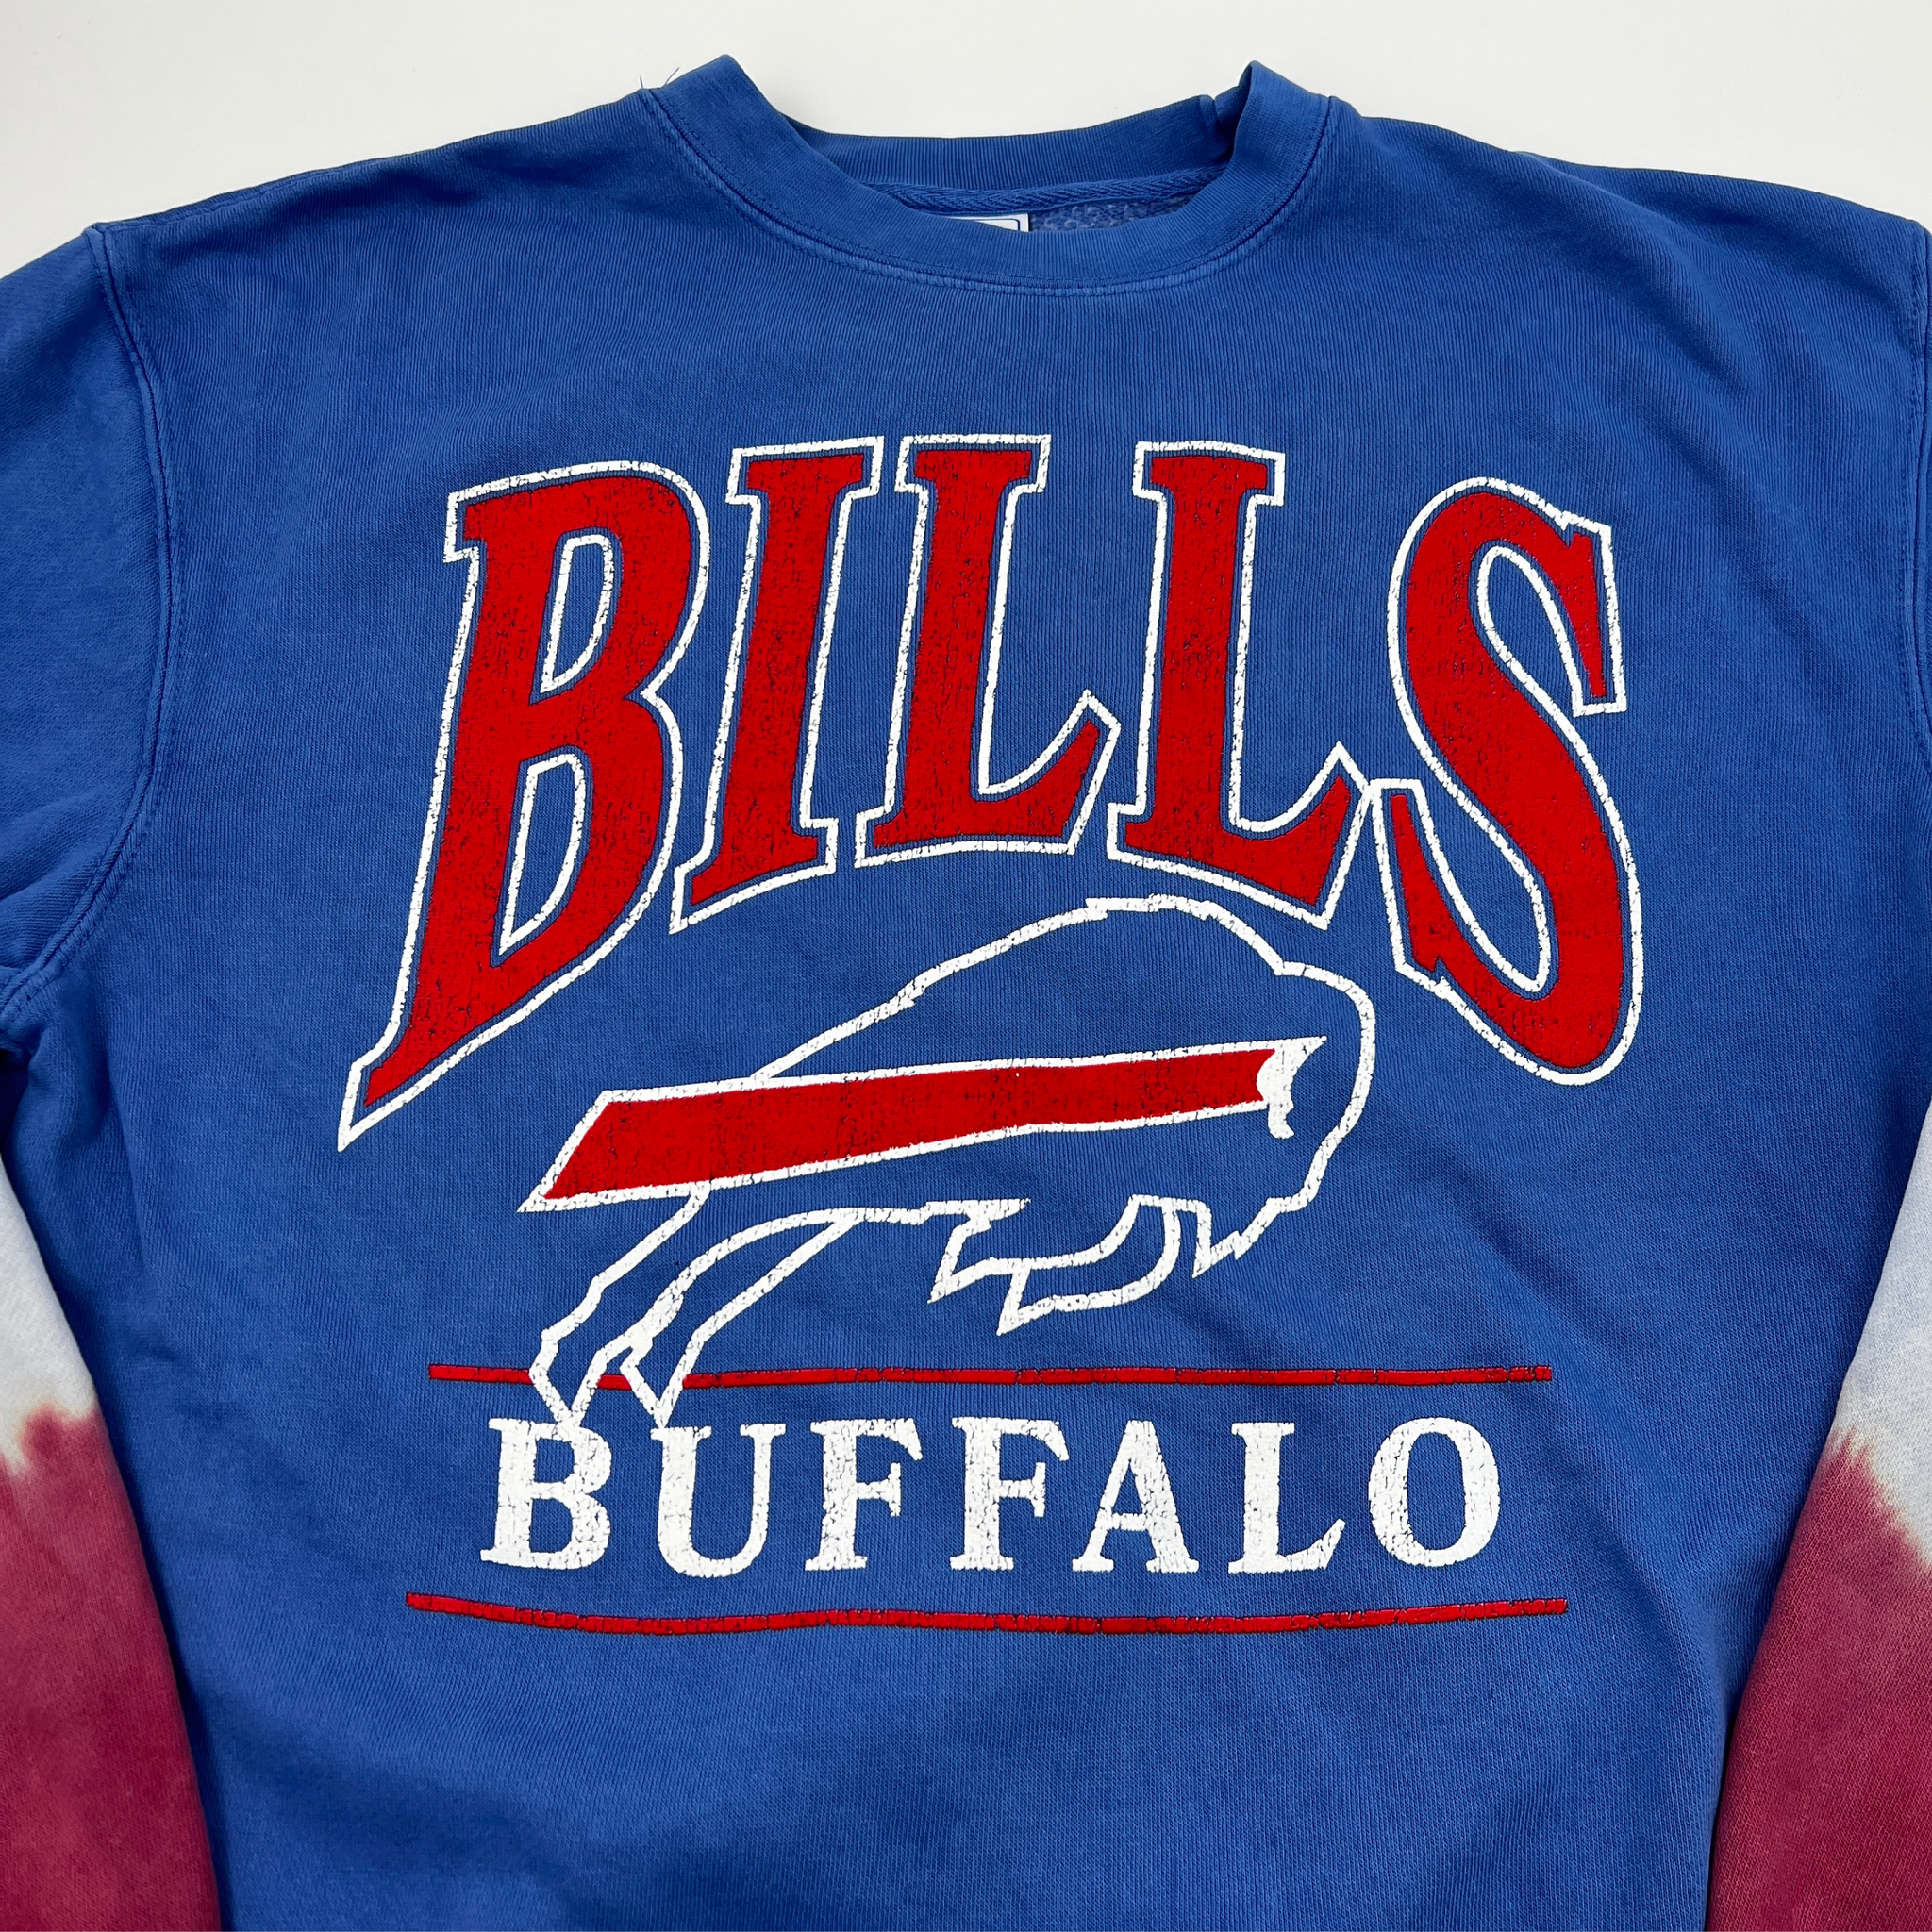 Shop Men's and Women's Buffalo Bills Apparel